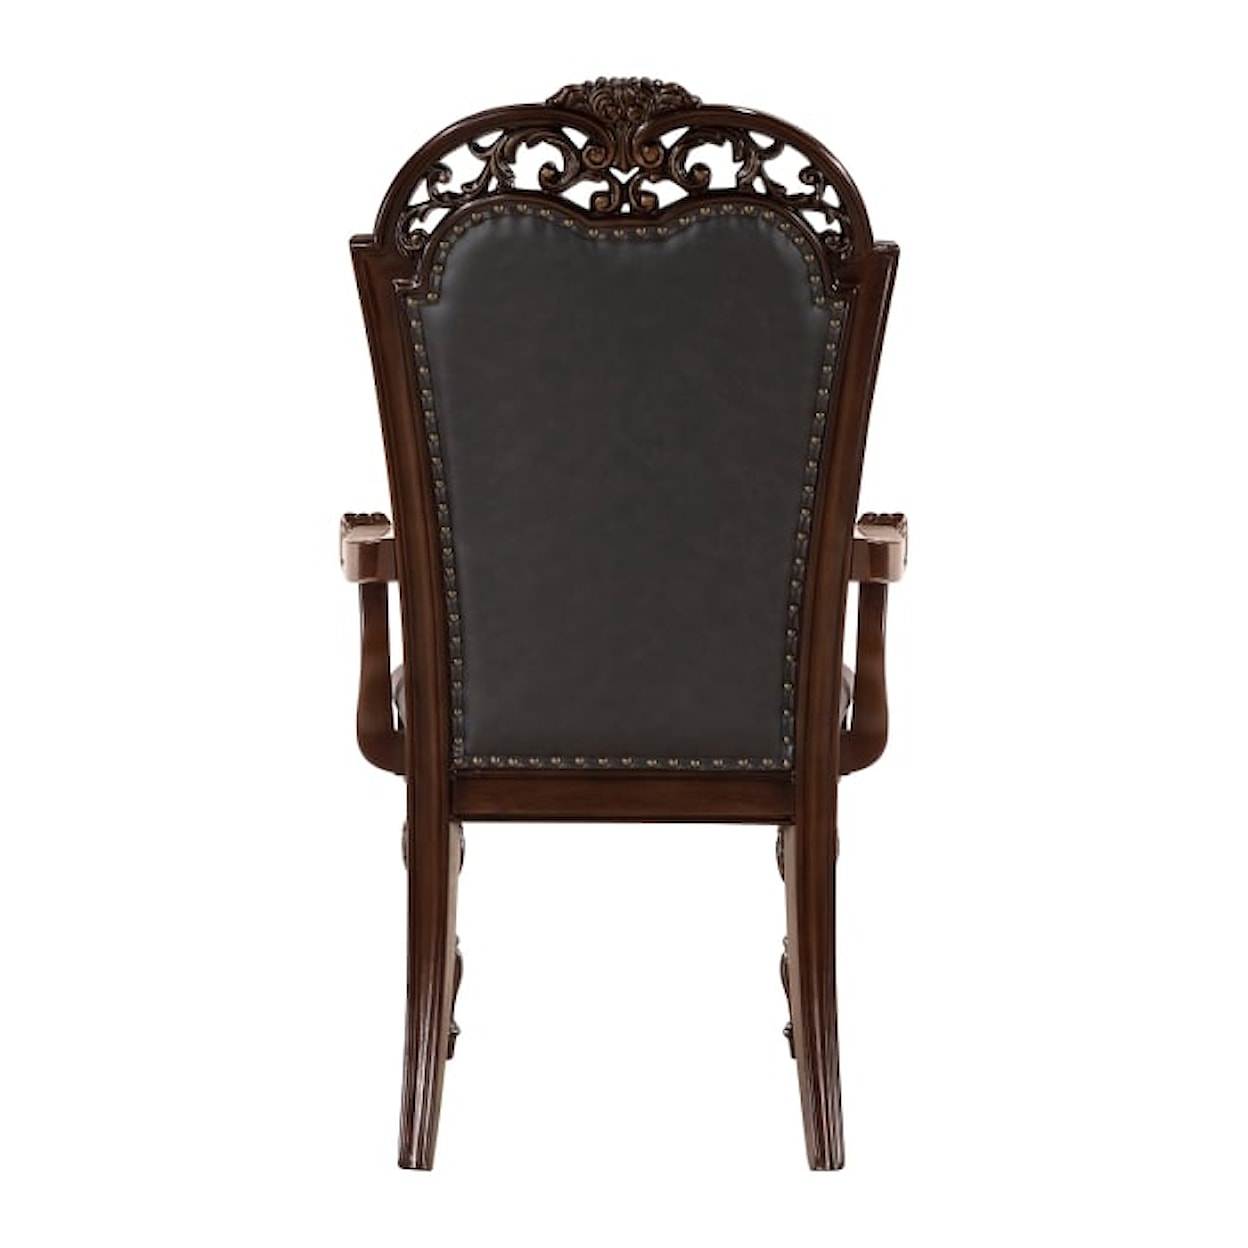 Homelegance Adelina Arm Chair